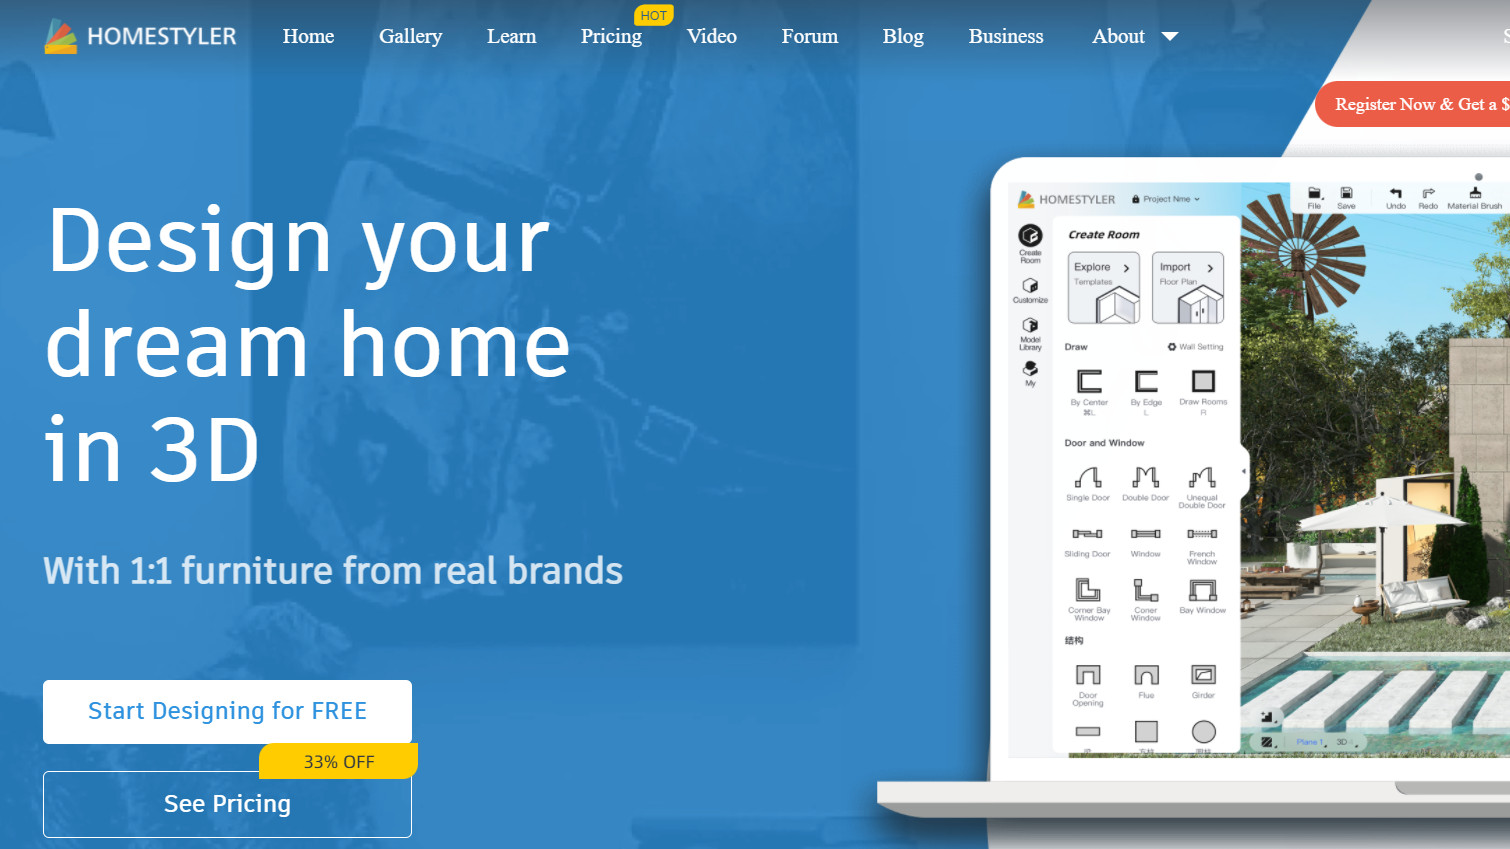 Best home design software: Homestyler